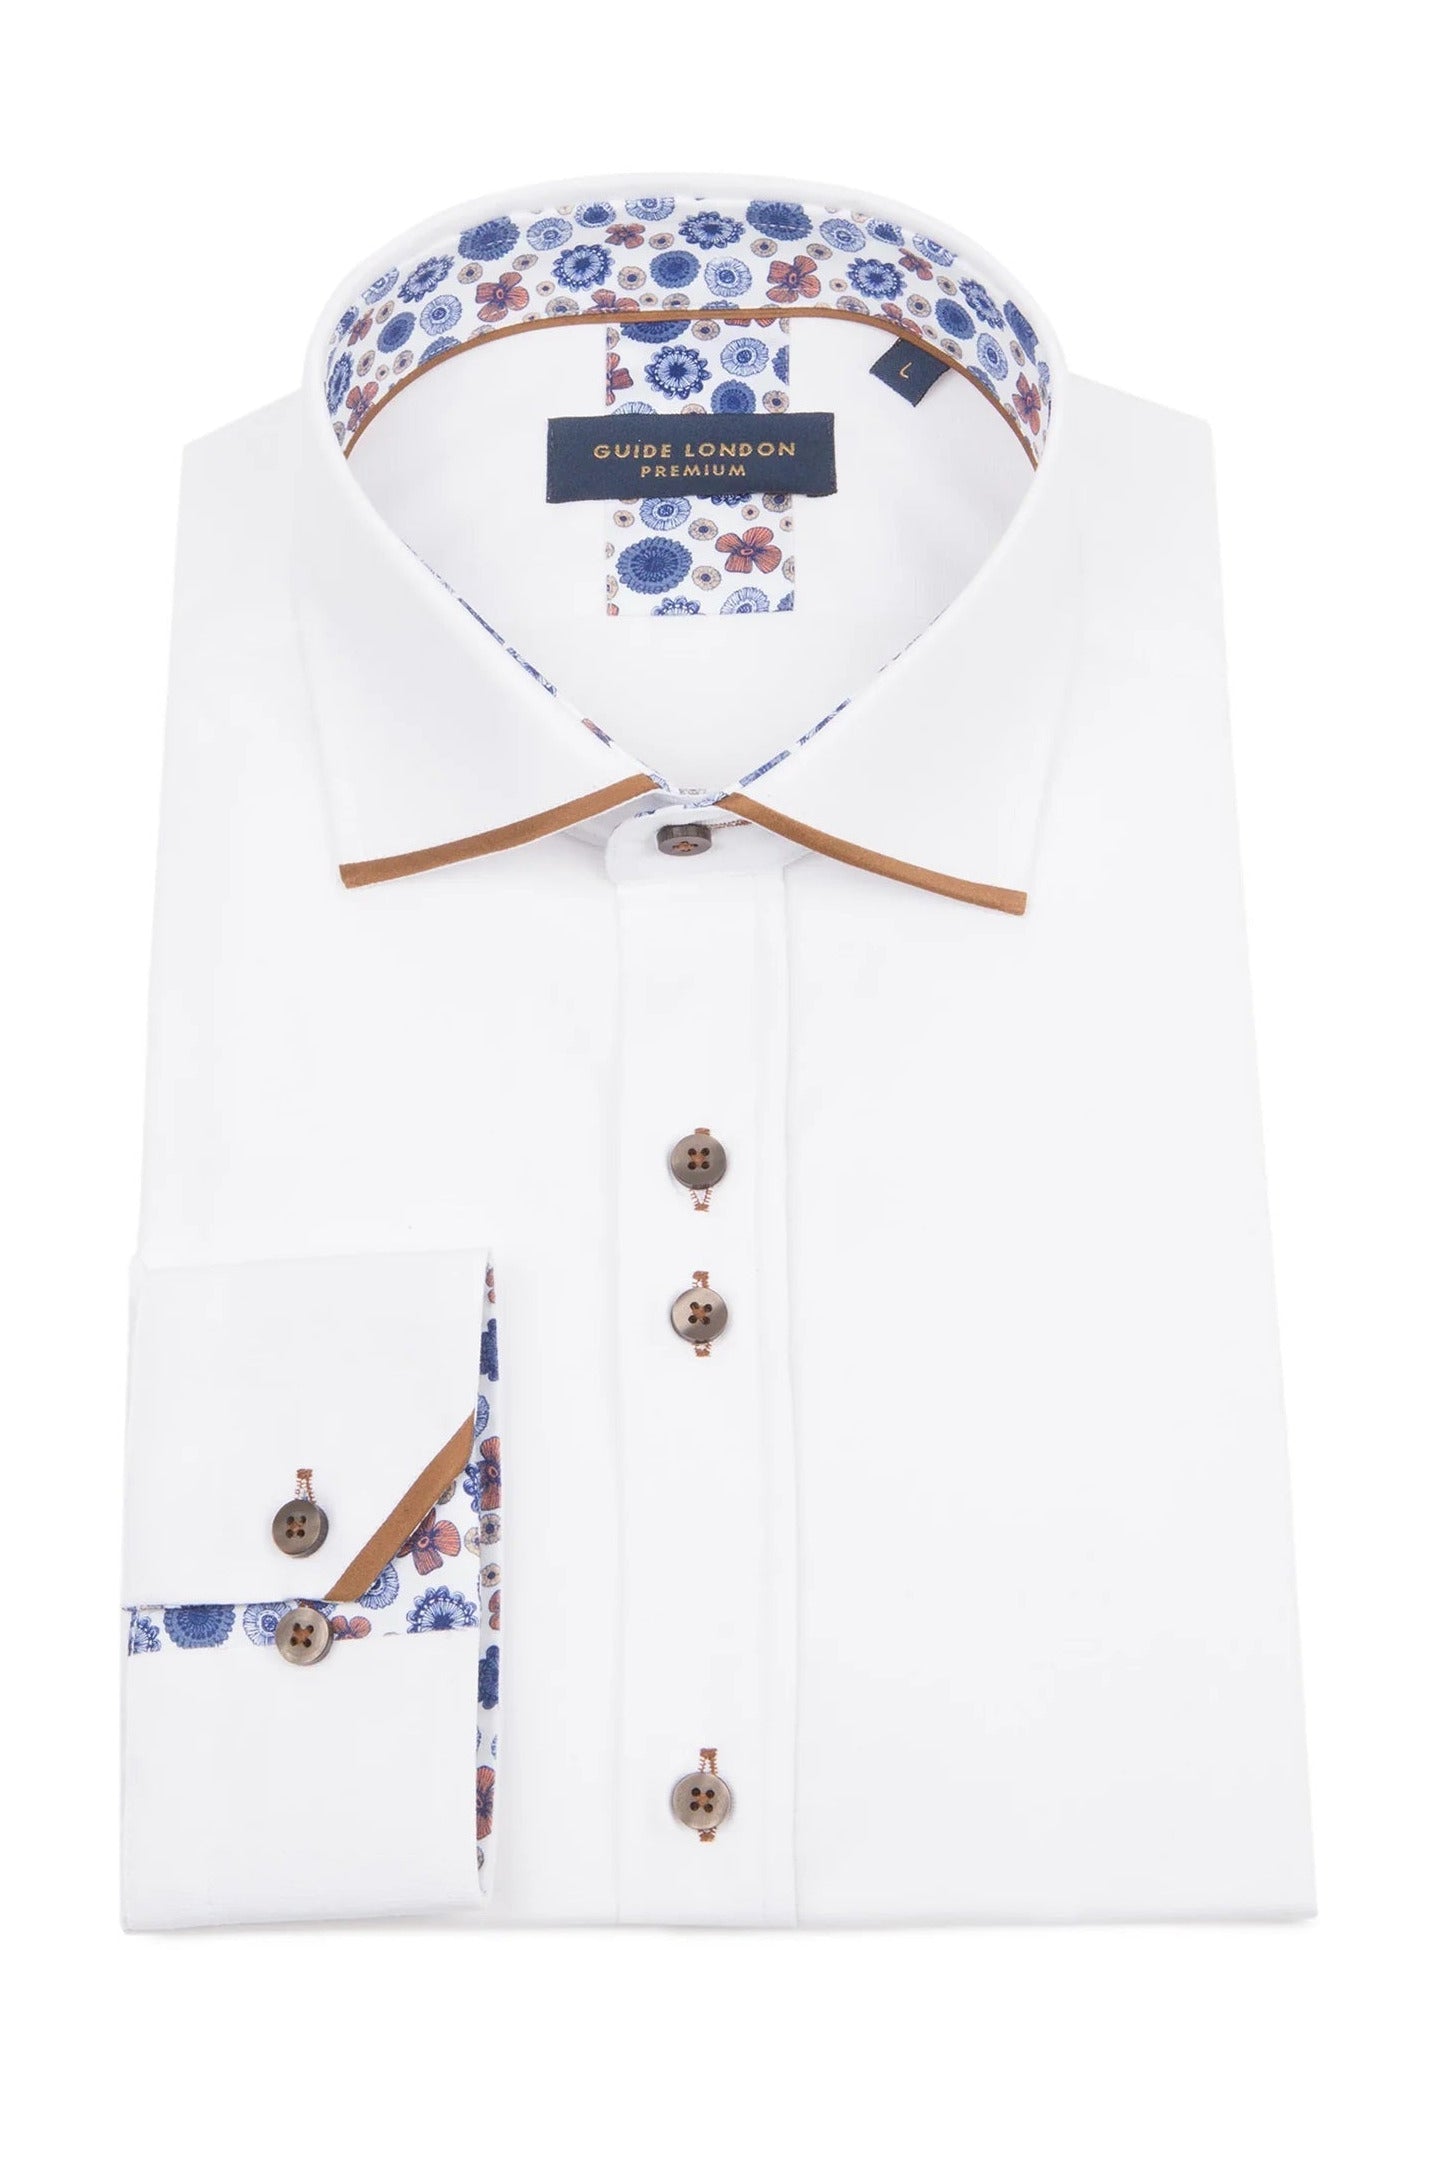 Guide London Long Sleeve Contrast Collar Tip Shirt LS76586 - White/Tan